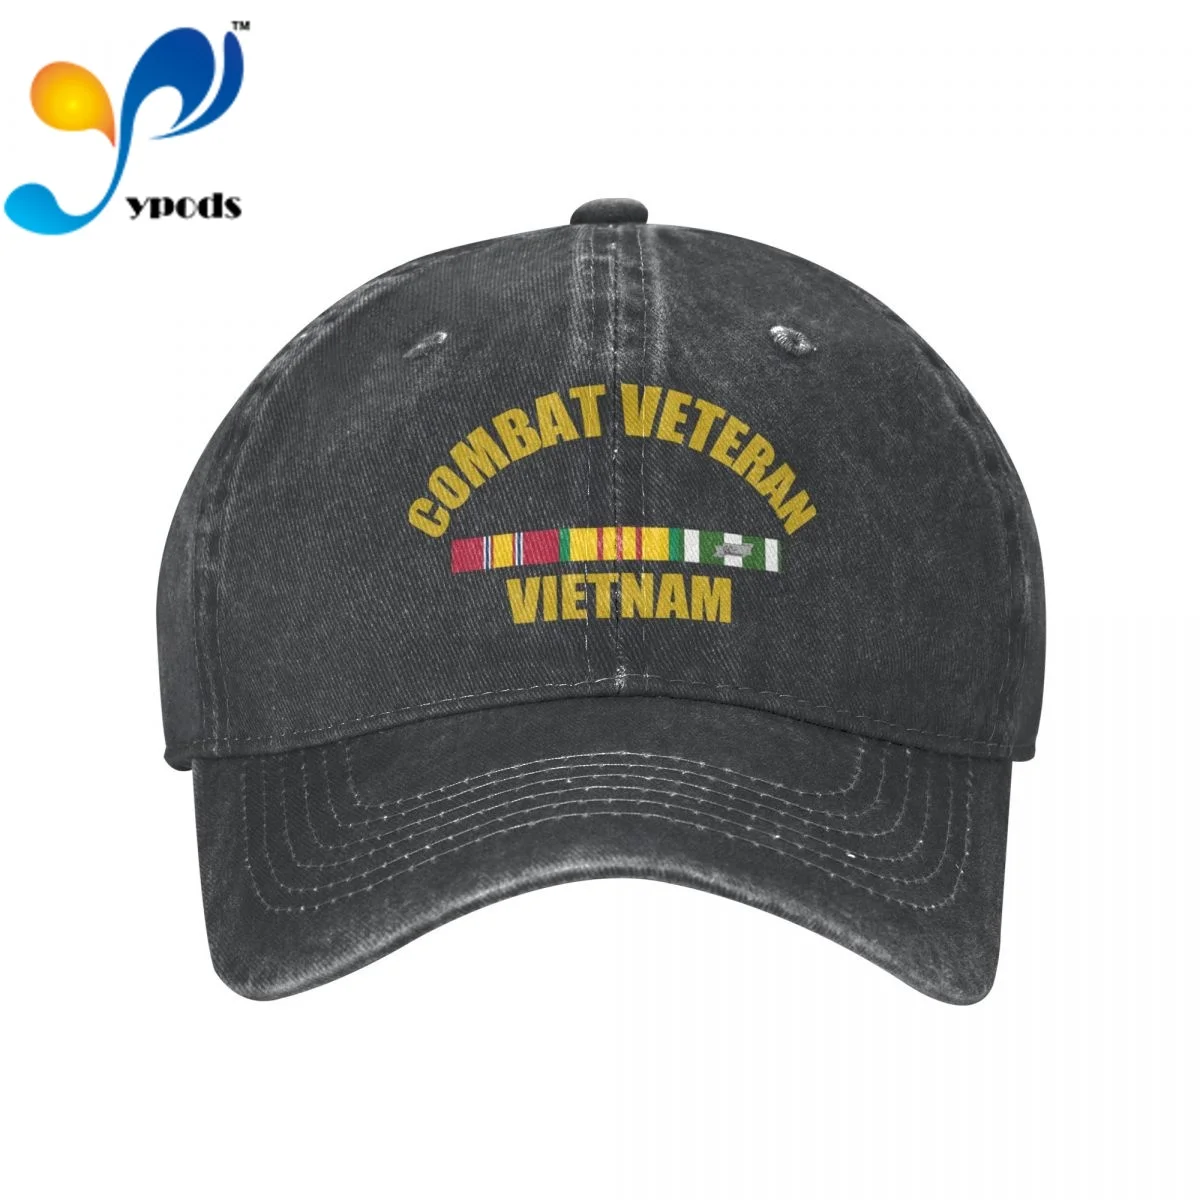 

Combat Veteran Vietnam With Ribbons Cotton Cap For Men Women Gorras Snapback Caps Baseball Caps Casquette Dad Hat